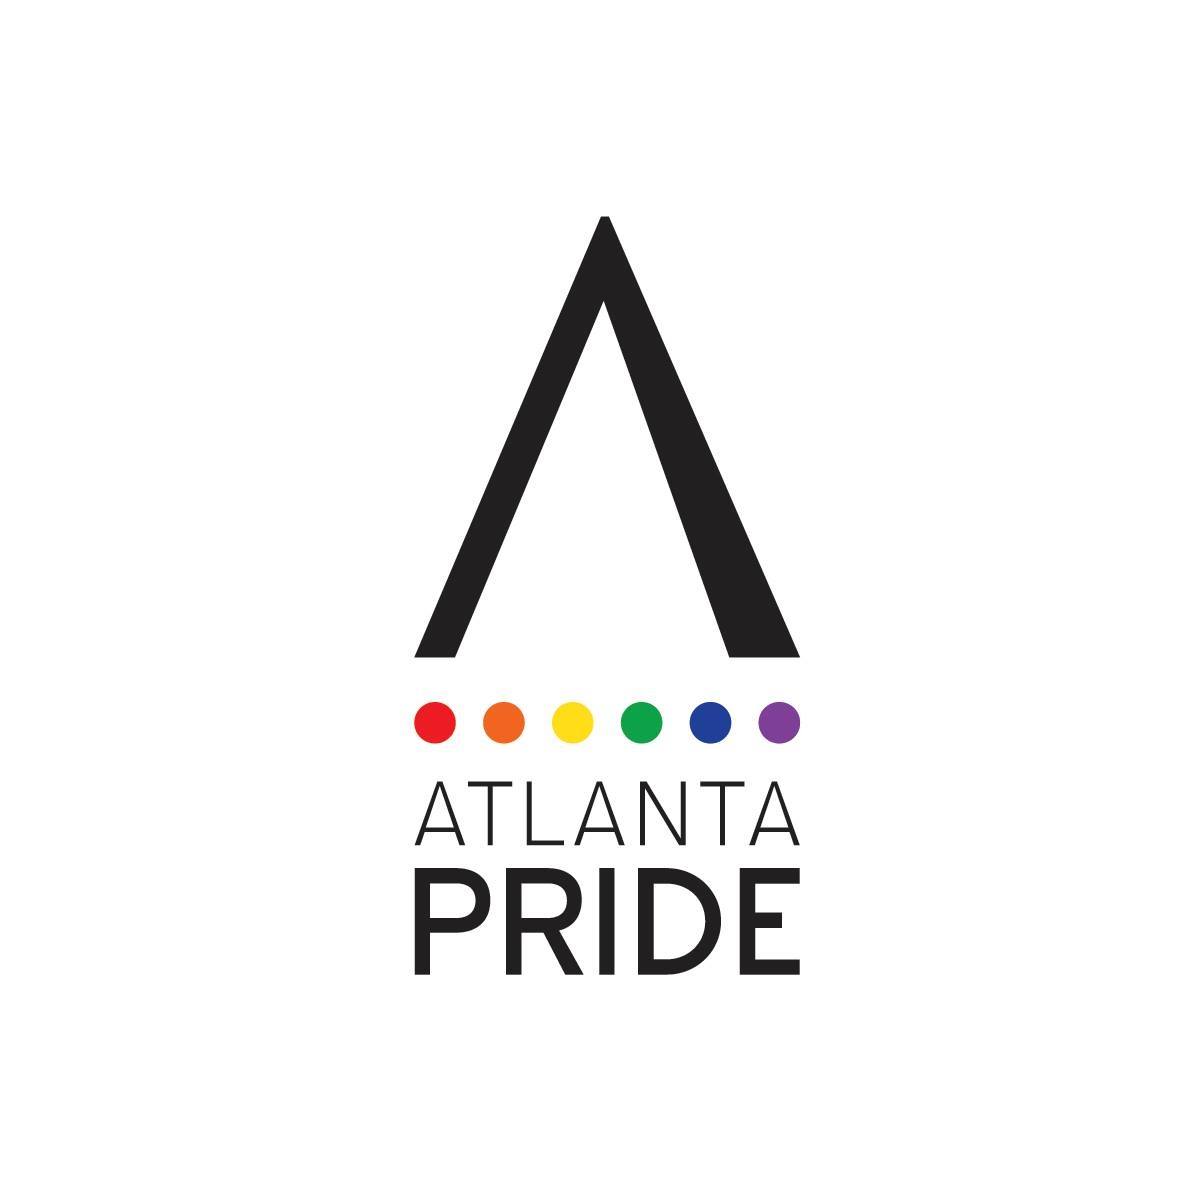 LGBTQ Organization in Atlanta Georgia - The Atlanta Pride Committee